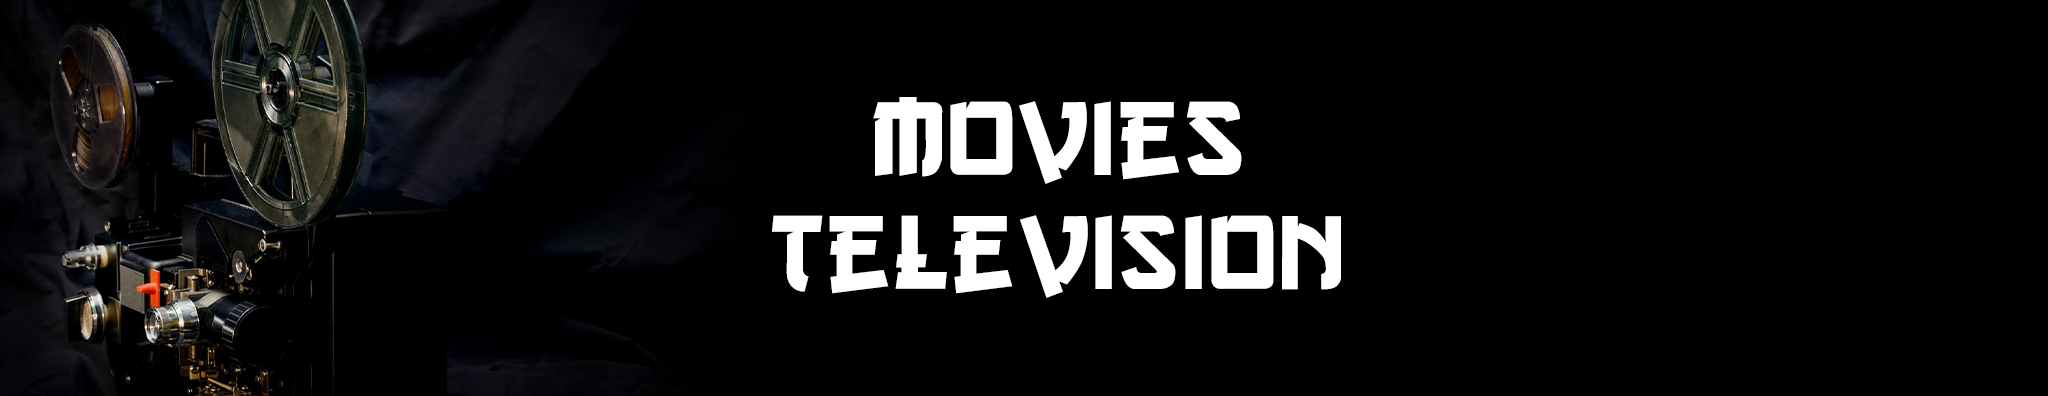 Funko Pop Movies & Television